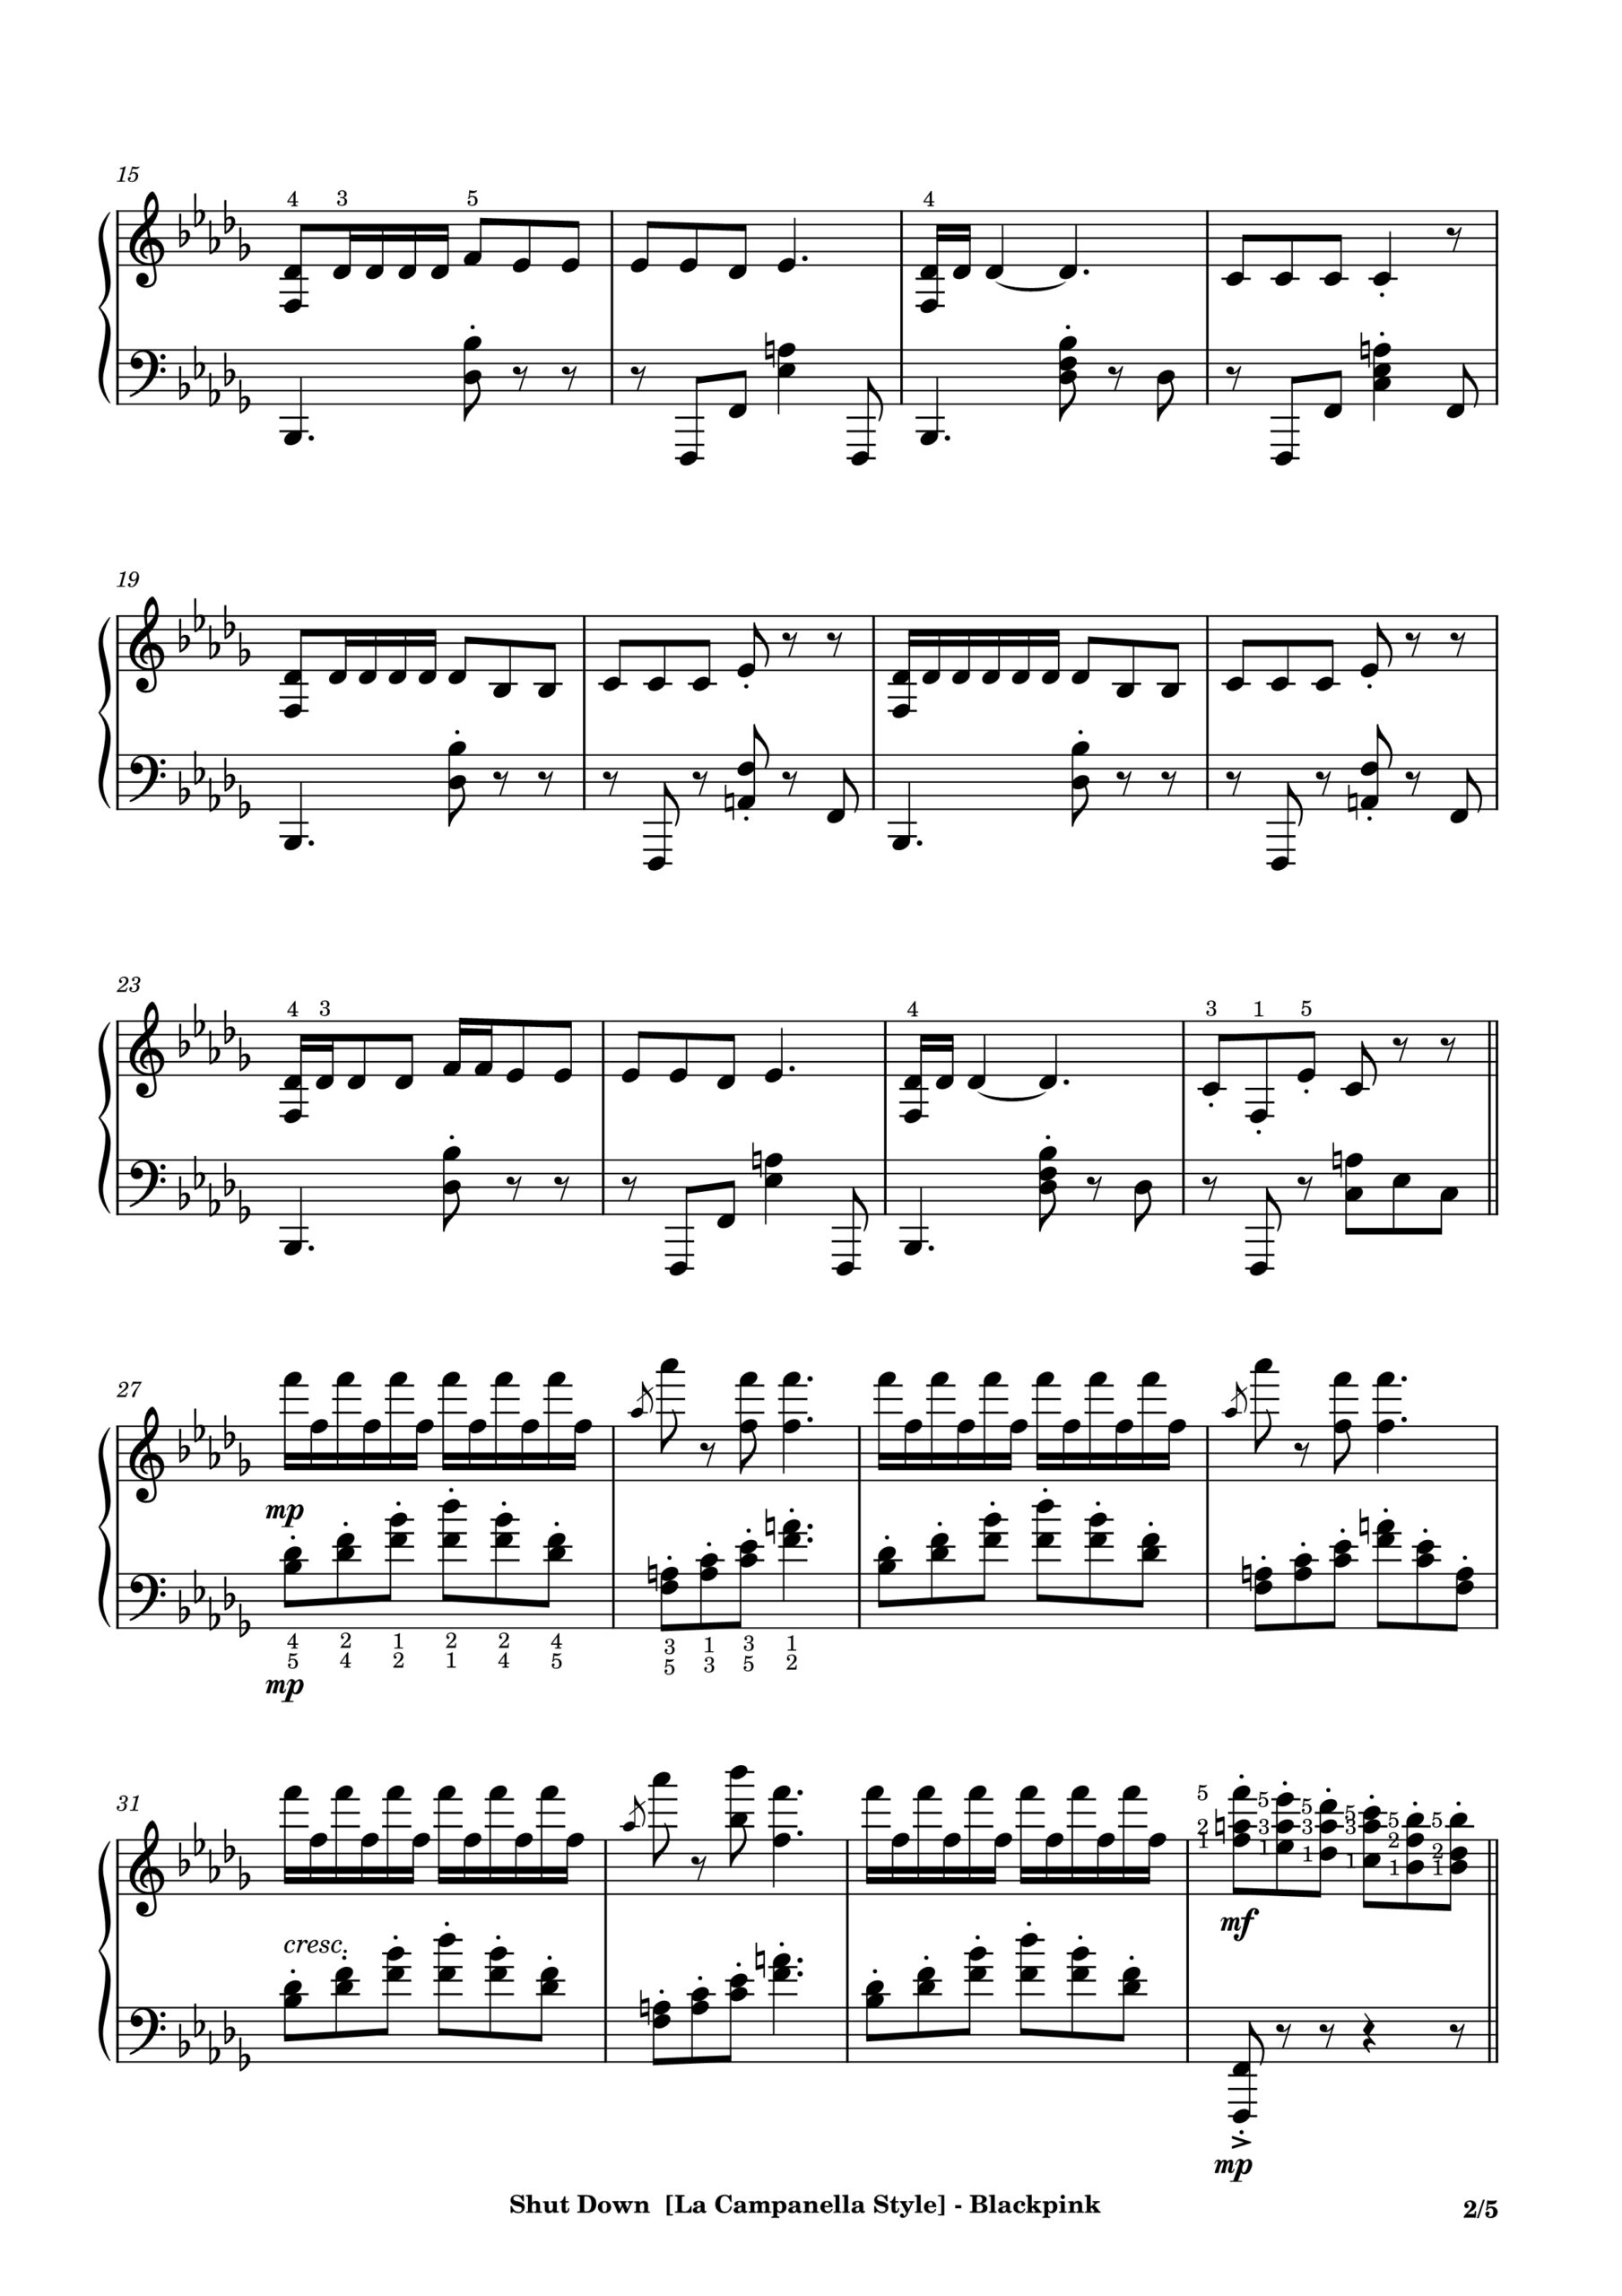 Blackpink, Shut Down La Campanella Style Piano Sheet Music Page 2